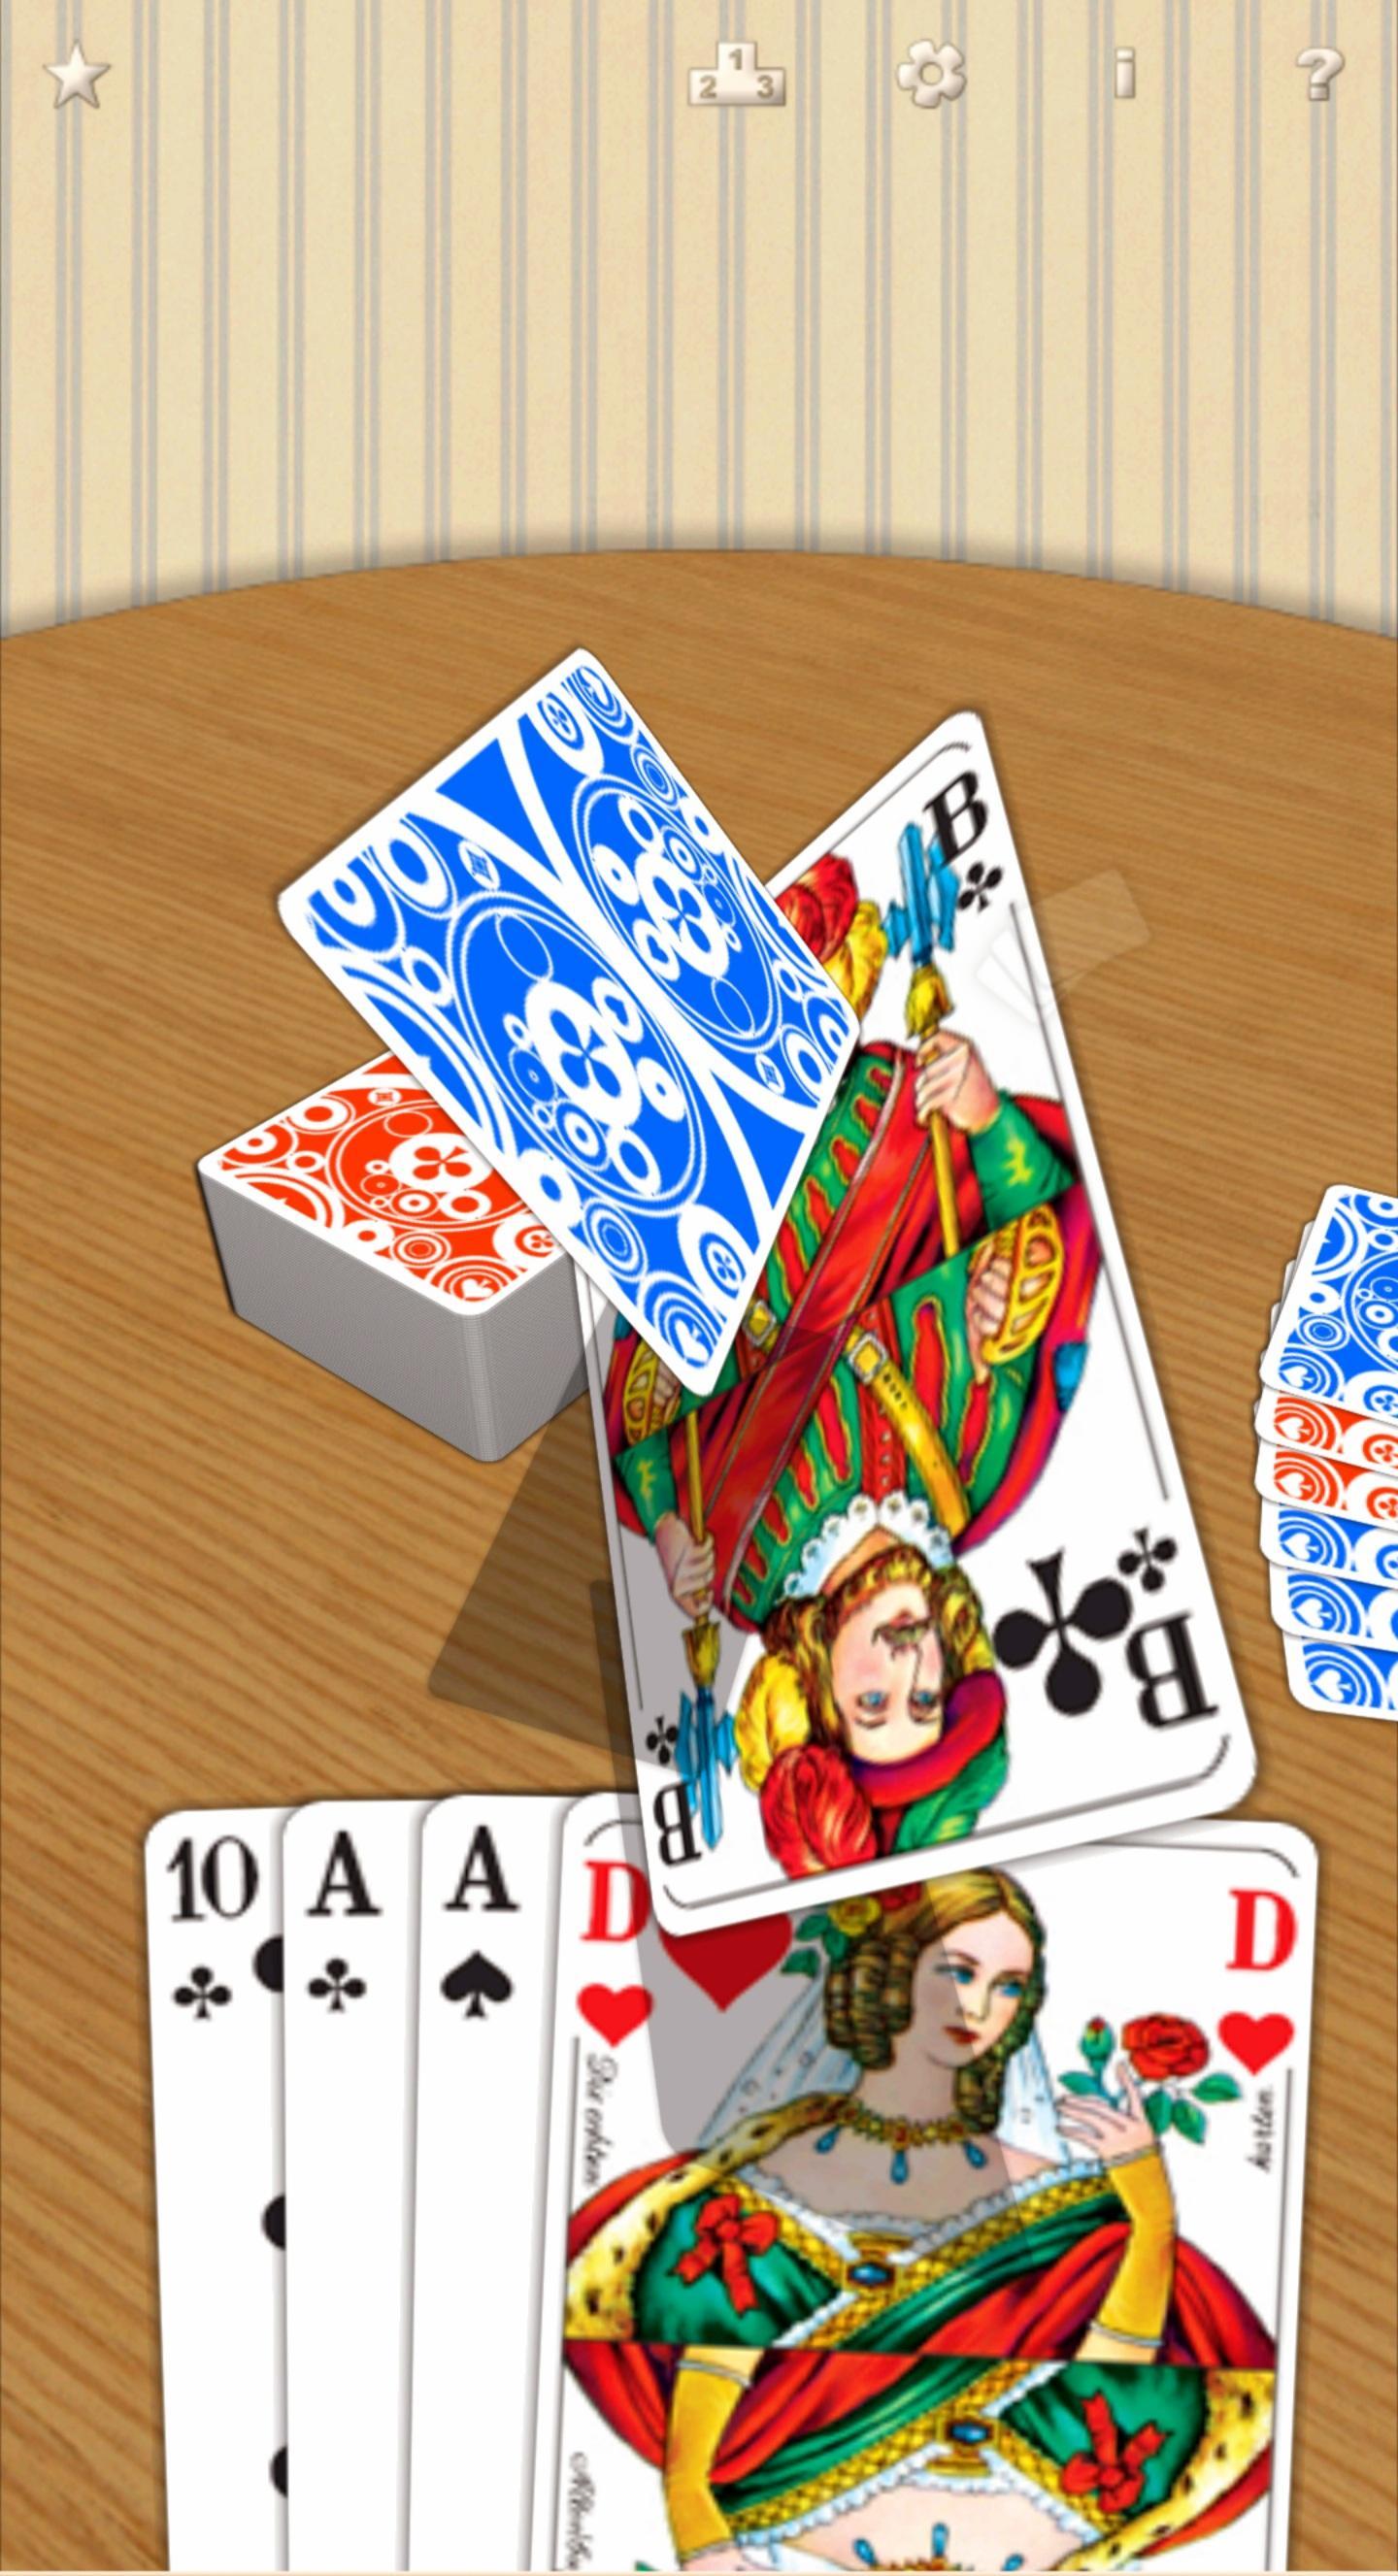 Crazy Eights free card game 1.6.96 Screenshot 16